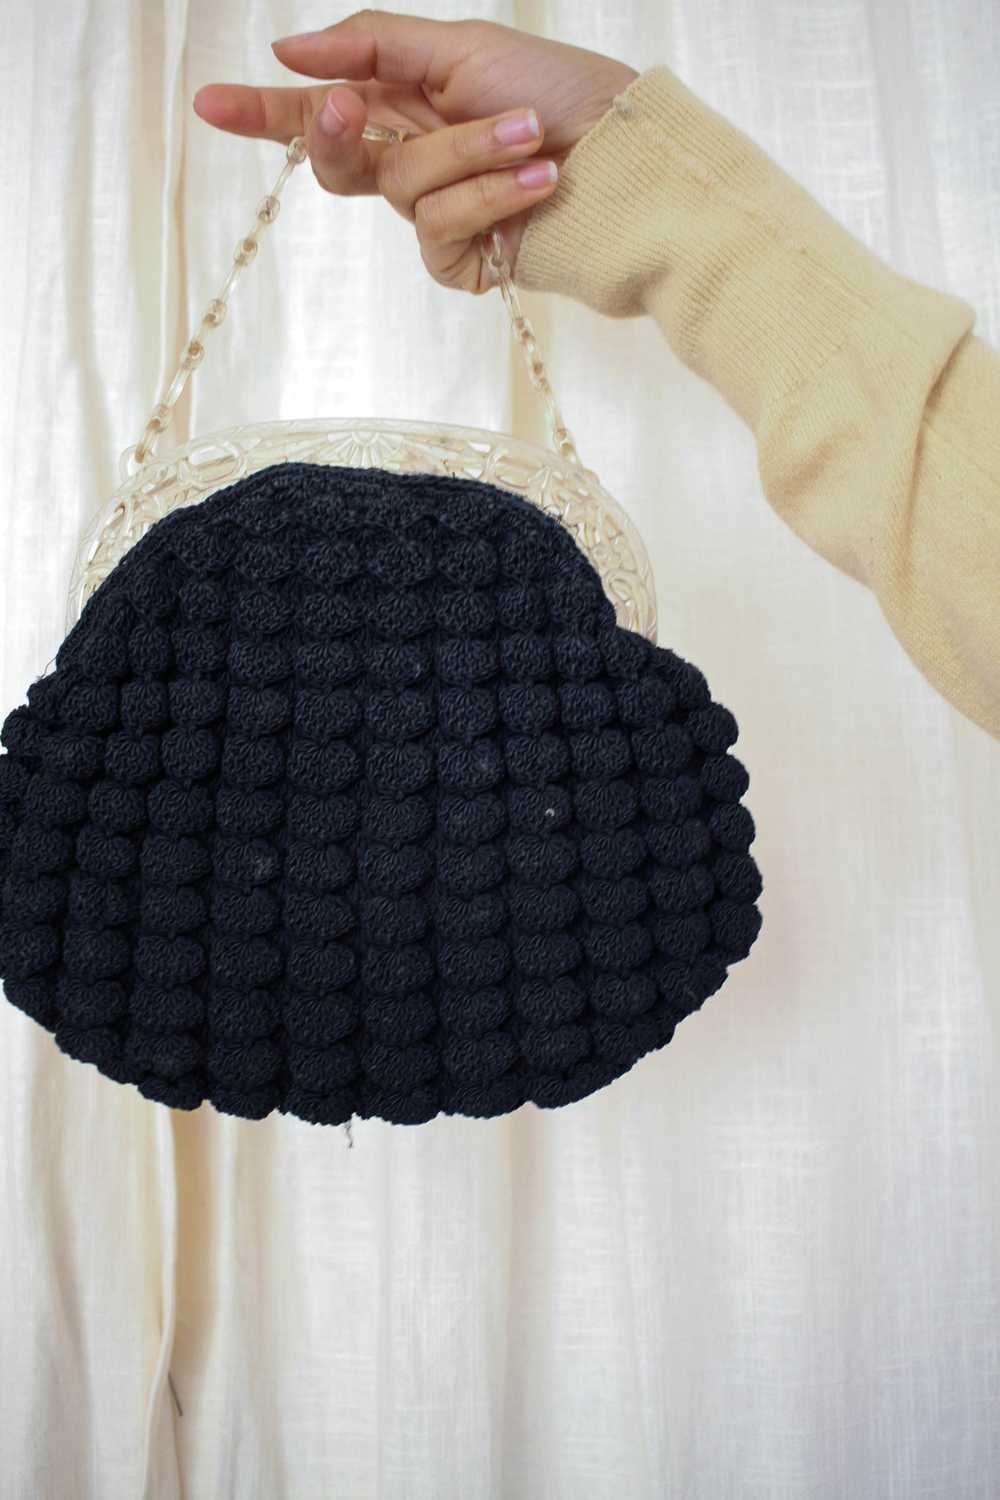 1930s Black Berry Knit Small Handbag - image 4